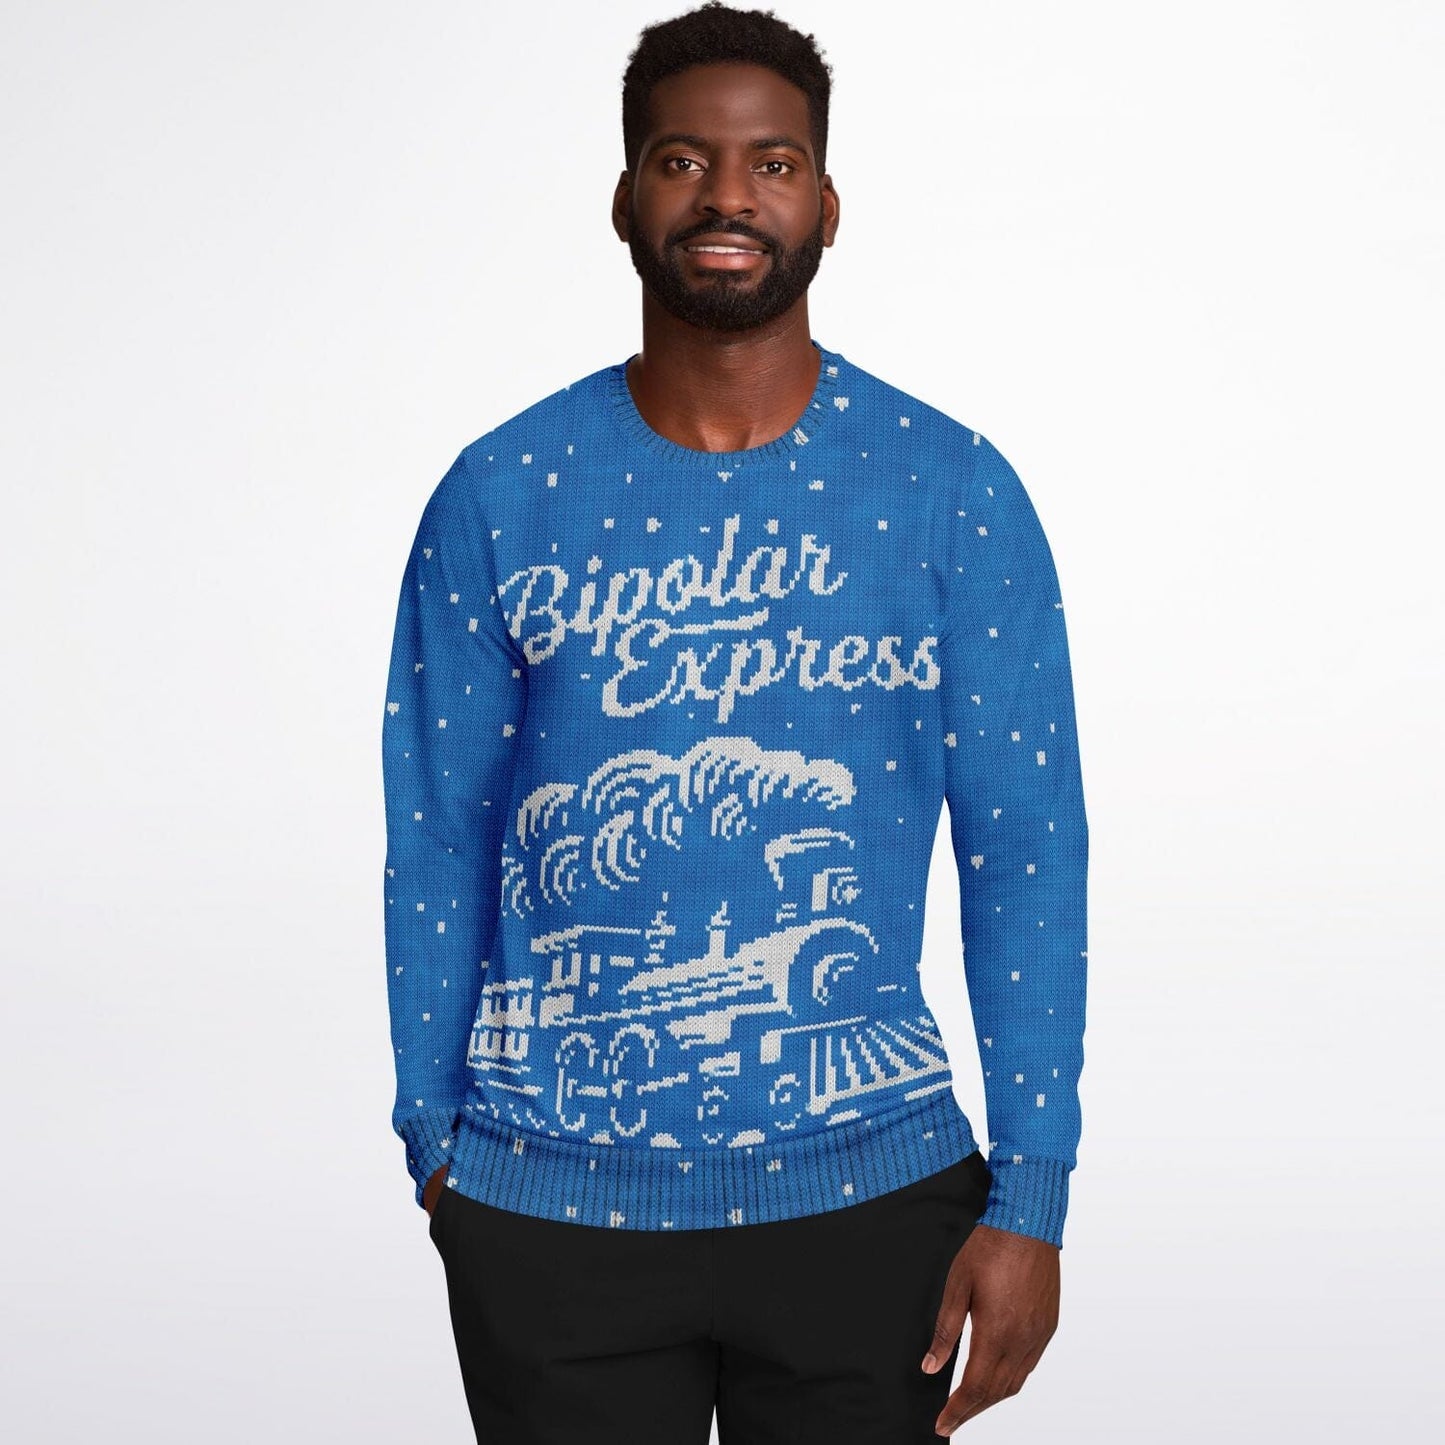 Bipolar Express - Funny Ugly Christmas Sweater (Sweatshirt)